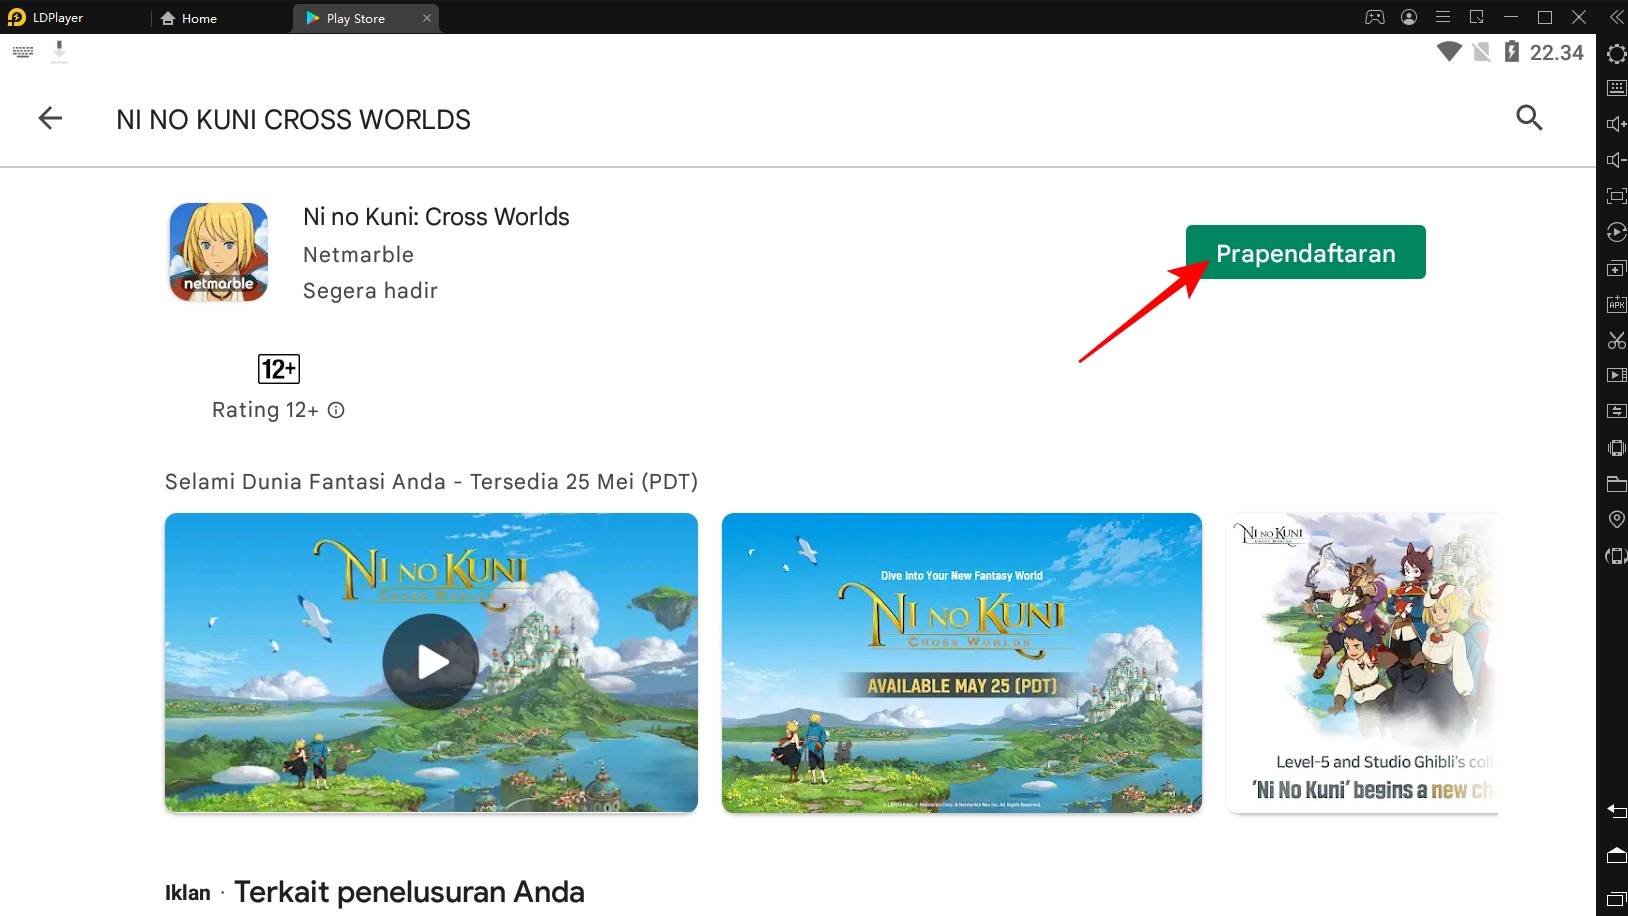 NI NO KUNI CROSS WORLDS download main di pc emulator